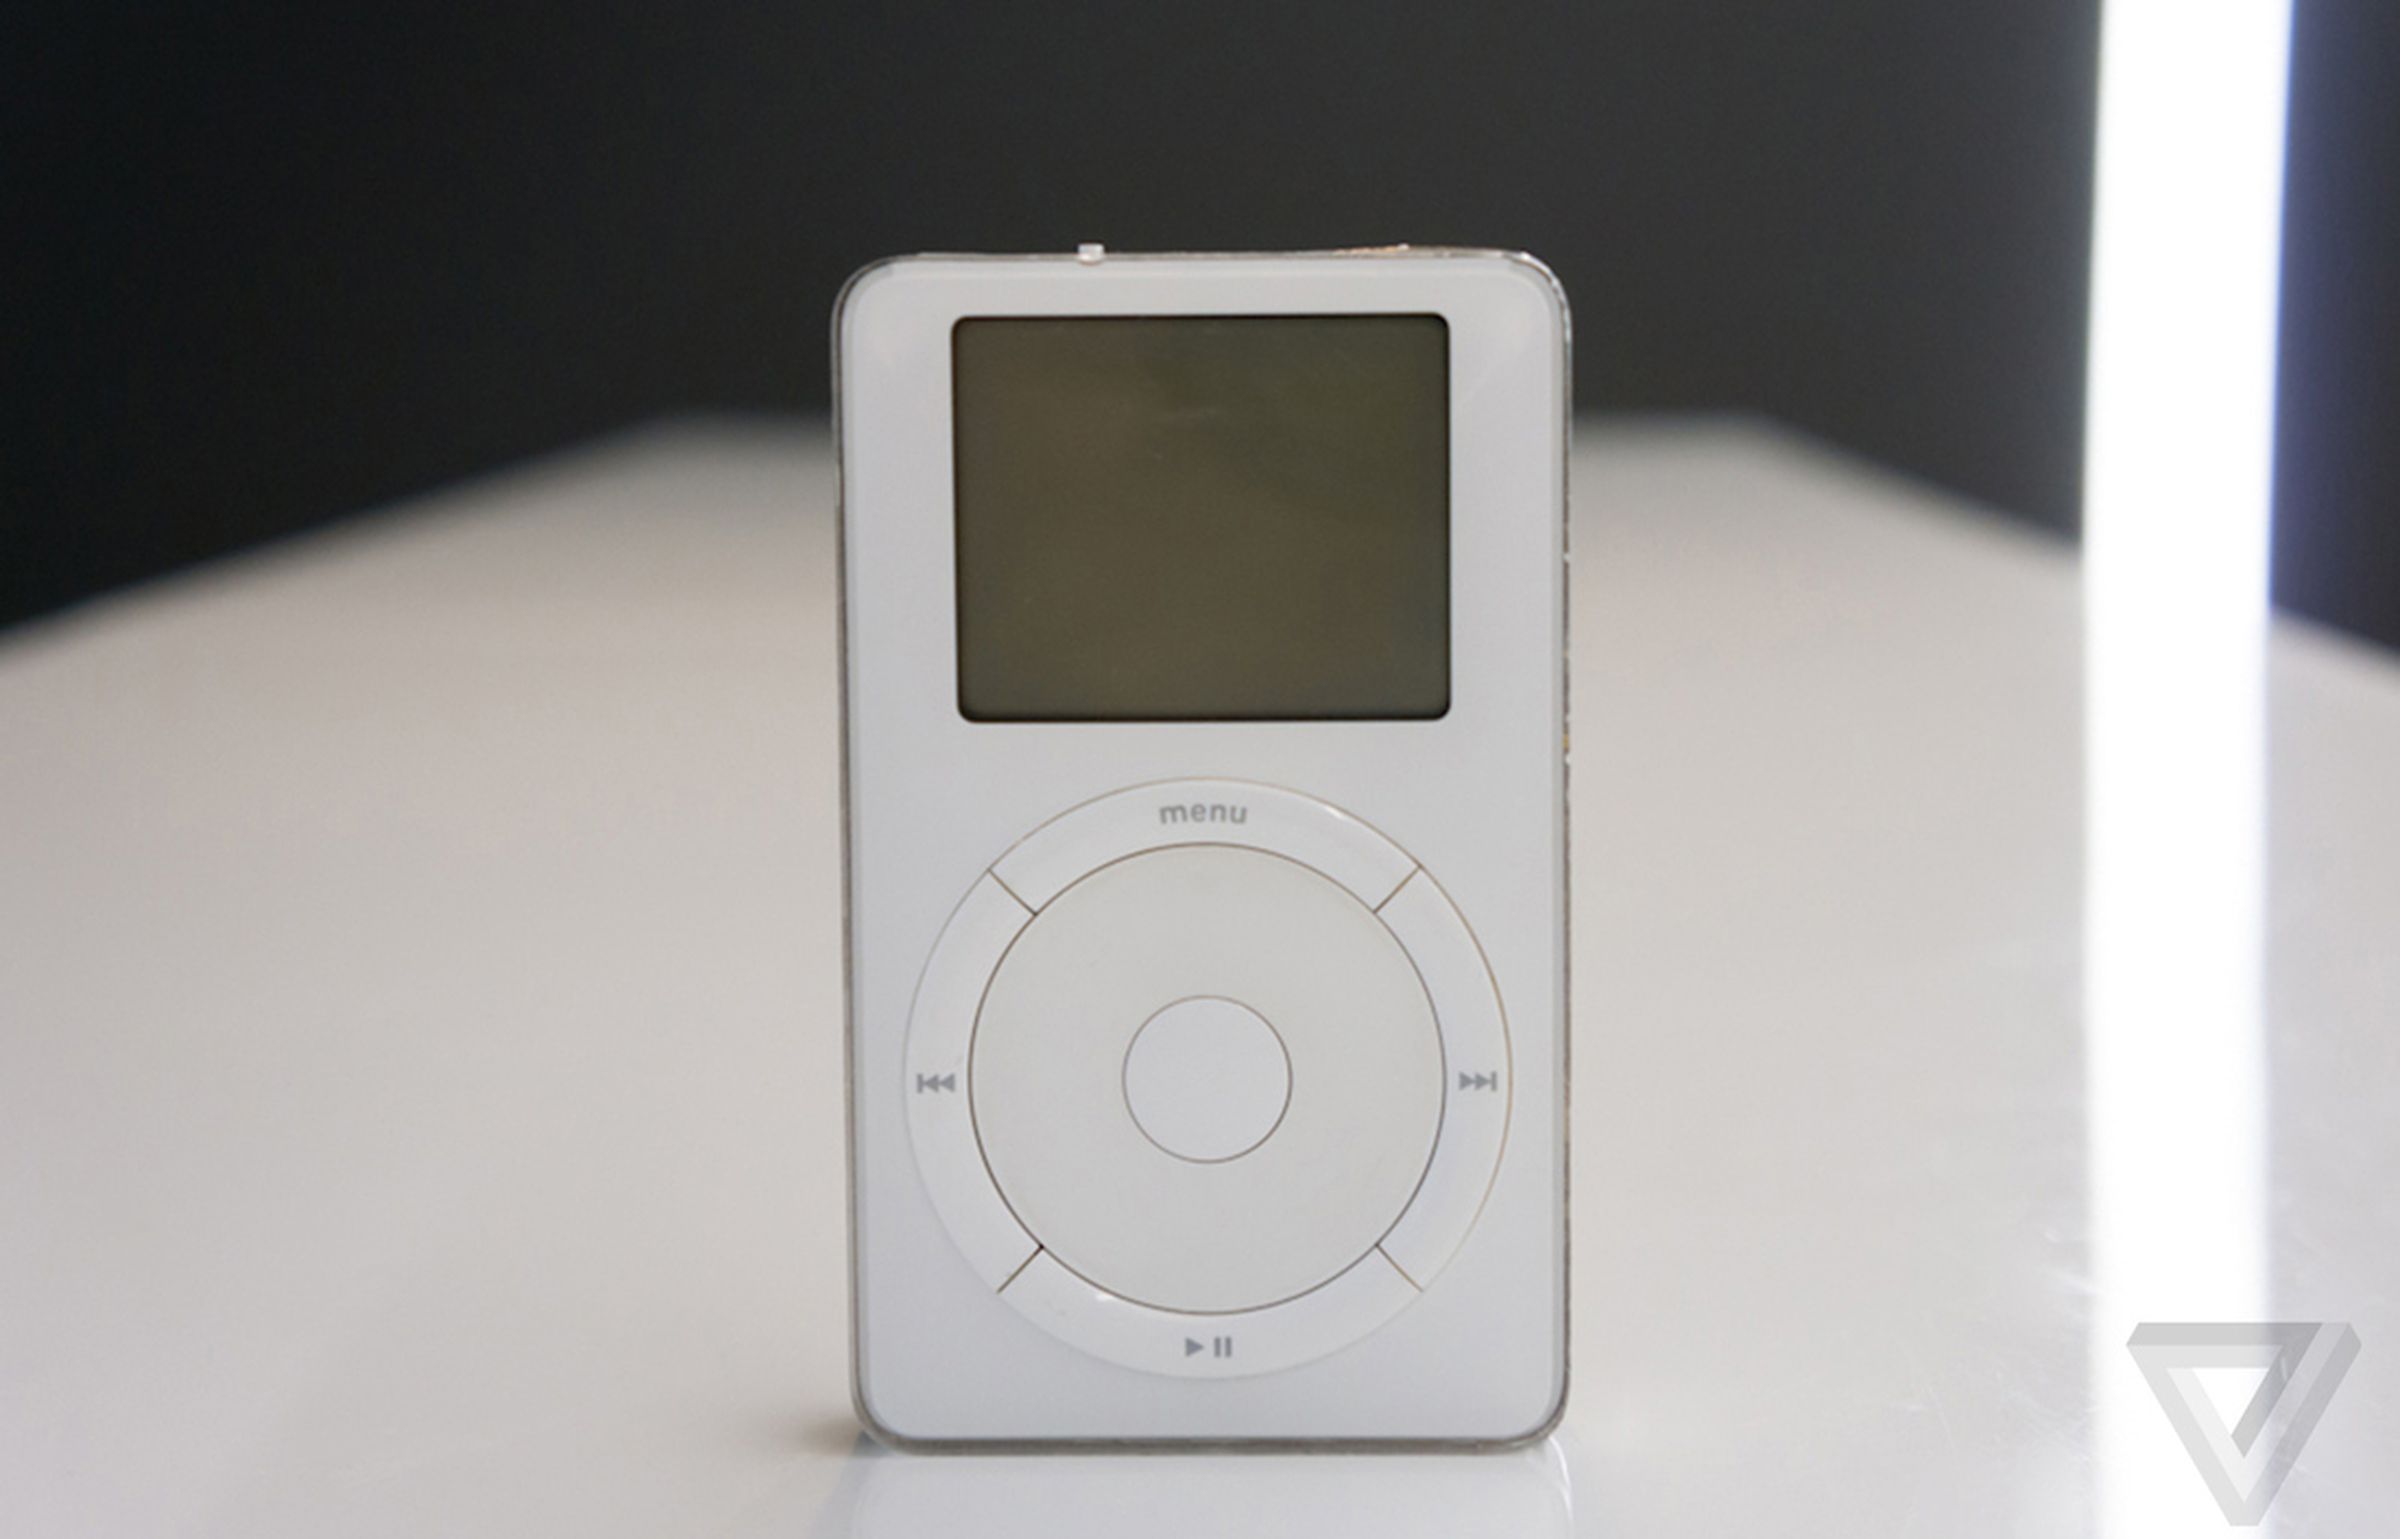 iPod classic: a visual history